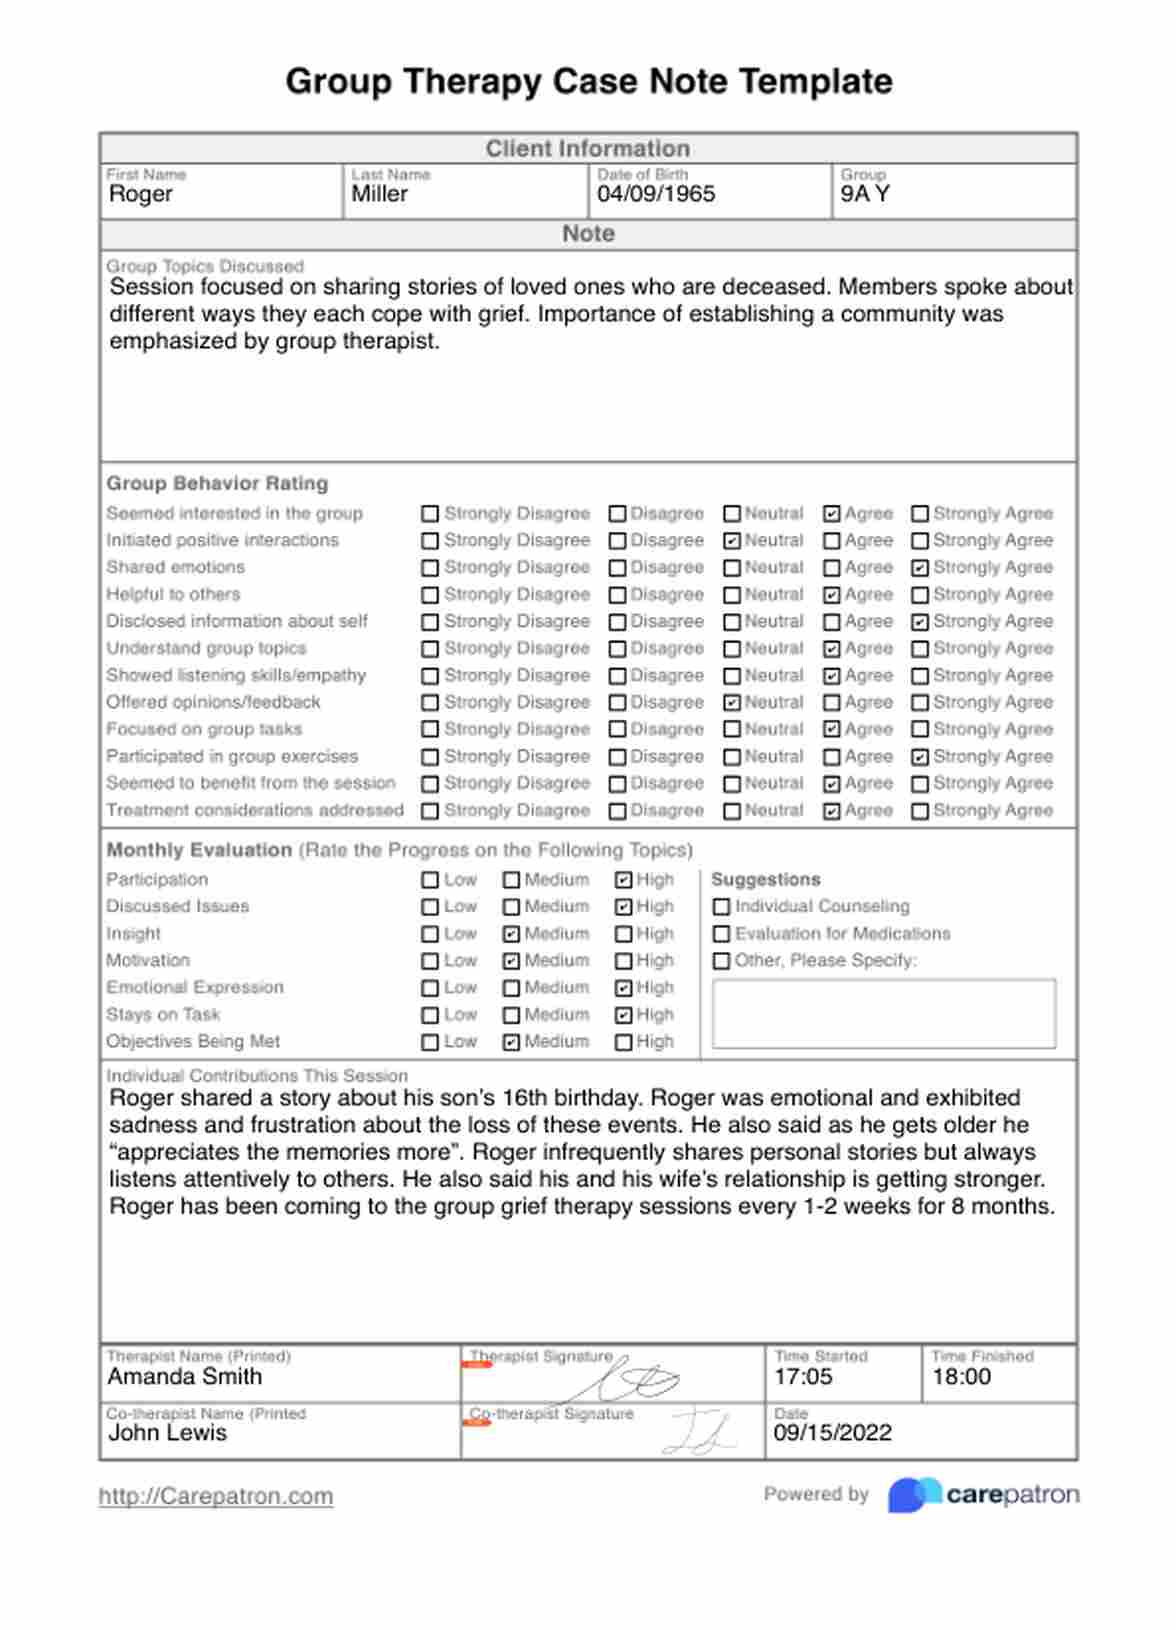 Plantilla de Notas de casos de terapia de grupo PDF Example